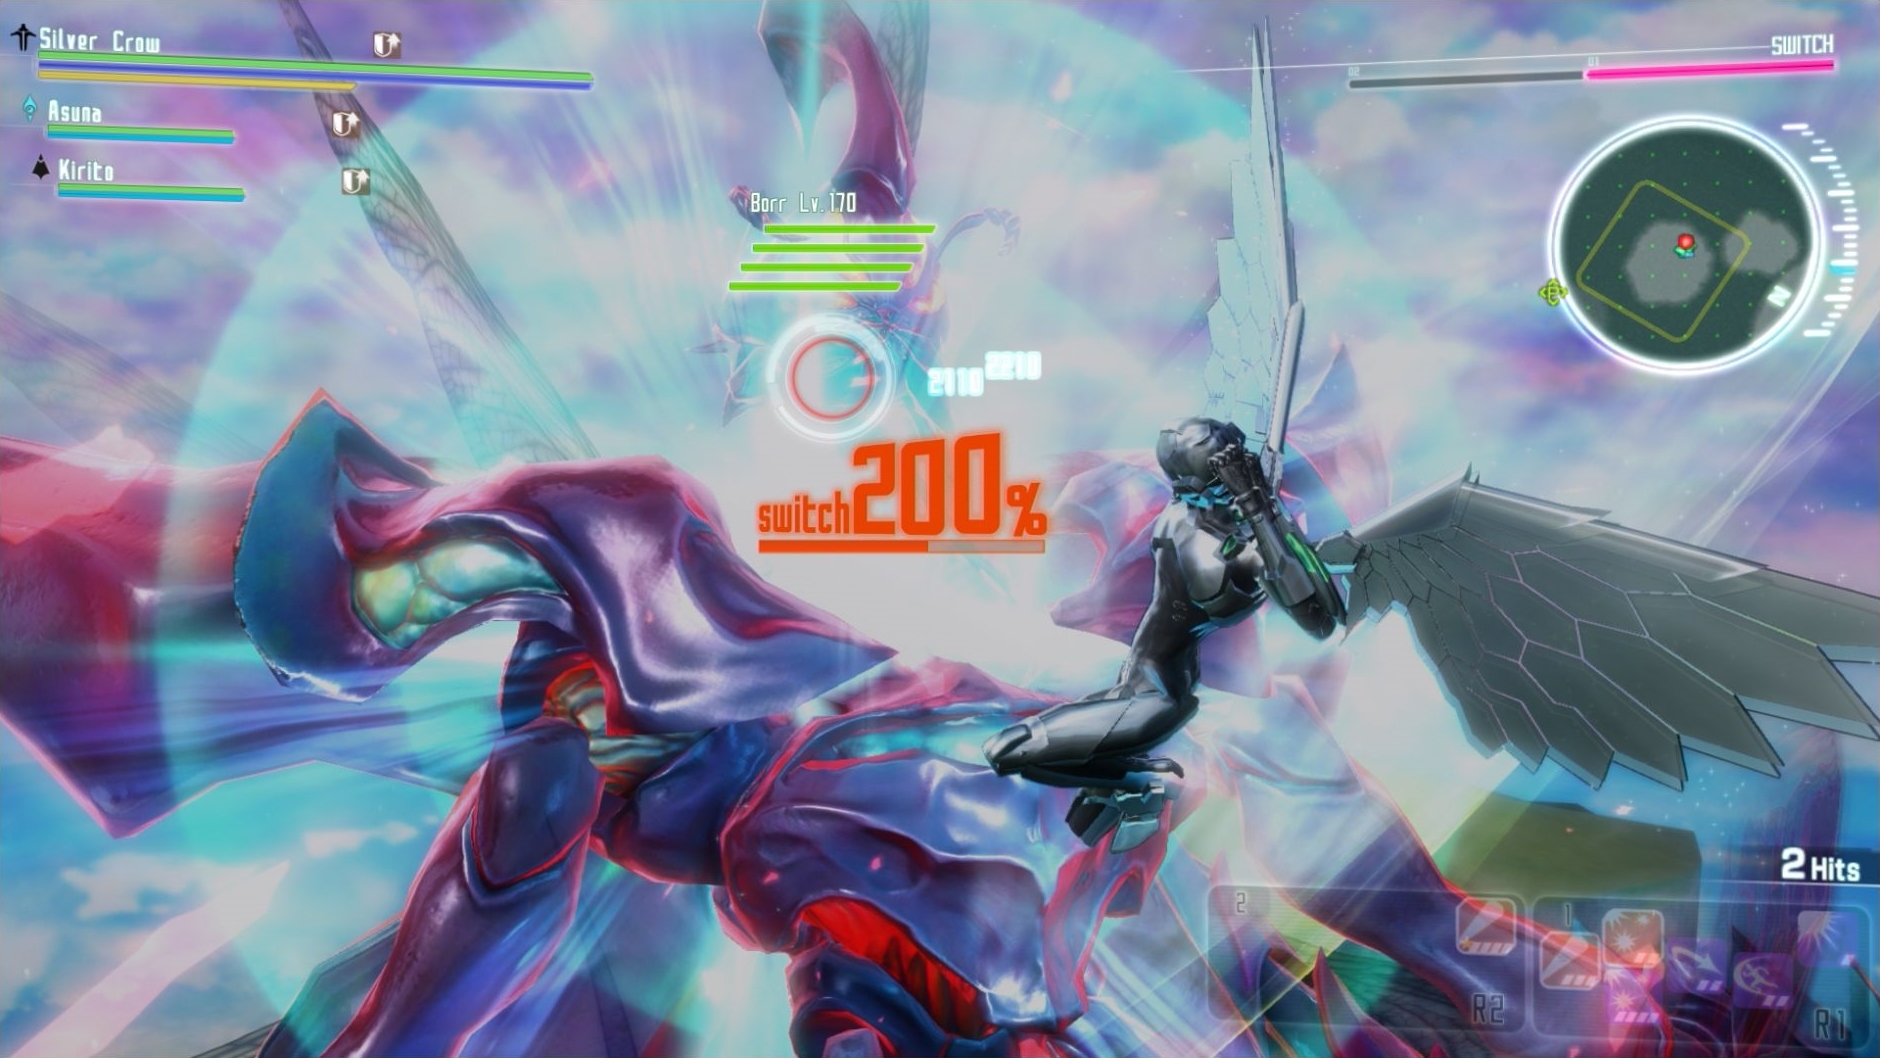 Anime Intel Malaysia: Sword Art Online, Accel World, real life